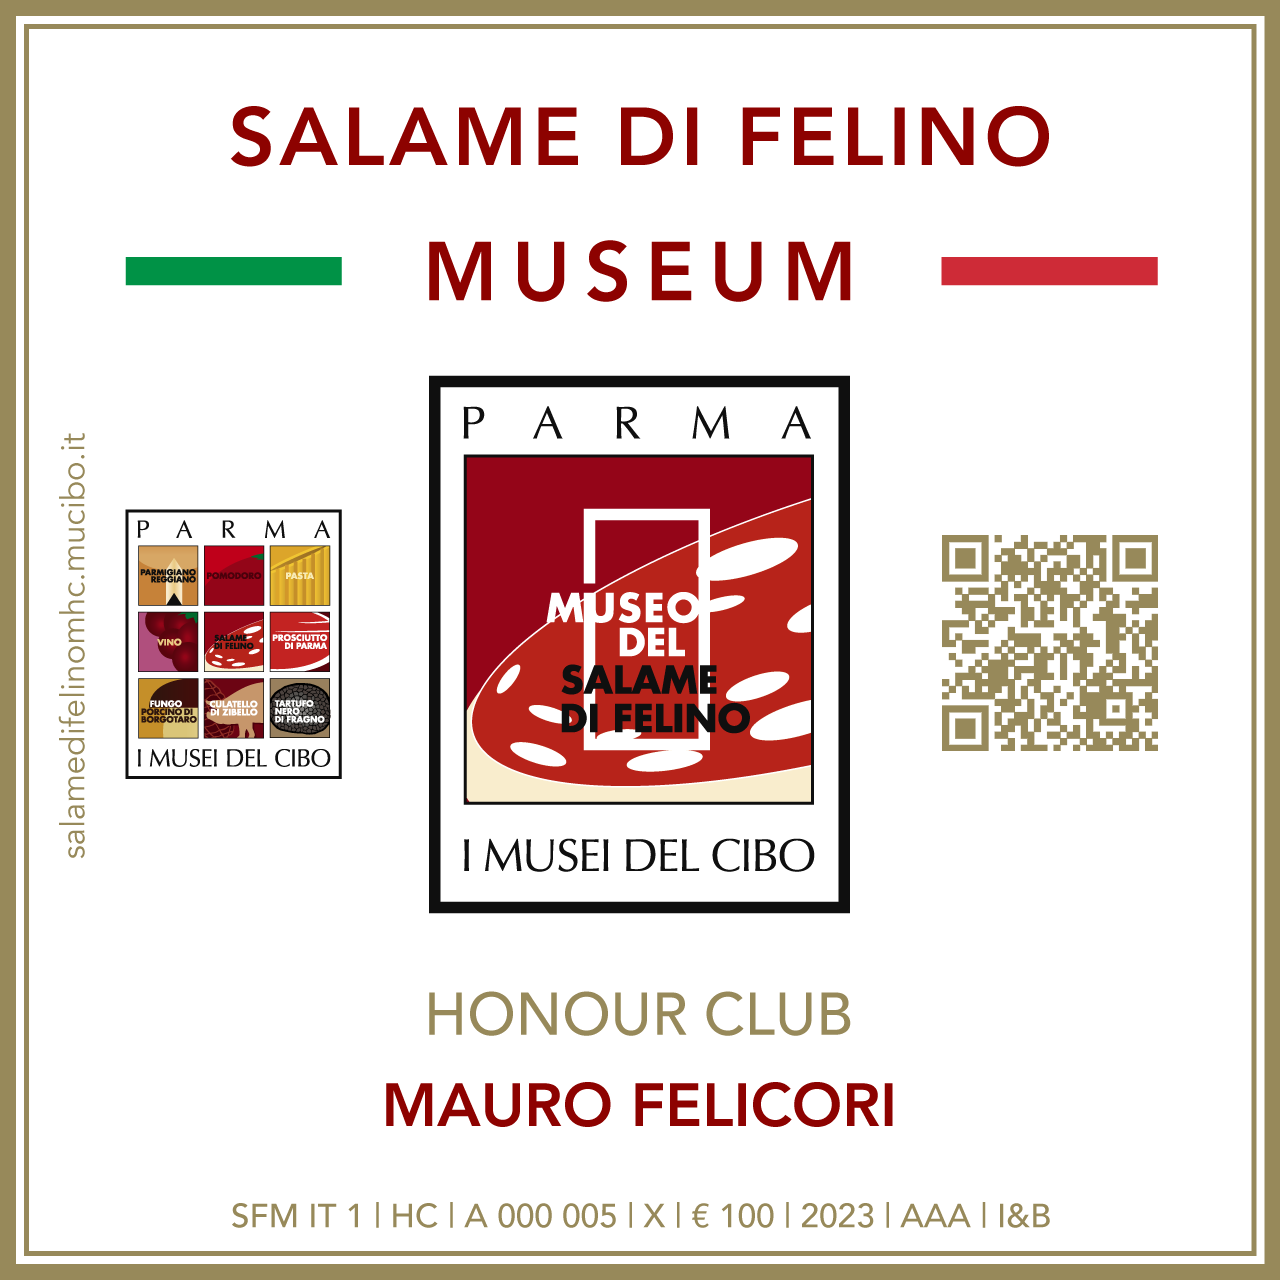 Salame di Felino Museum Honour Club - Token Id A 000 005 - MAURO FELICORI